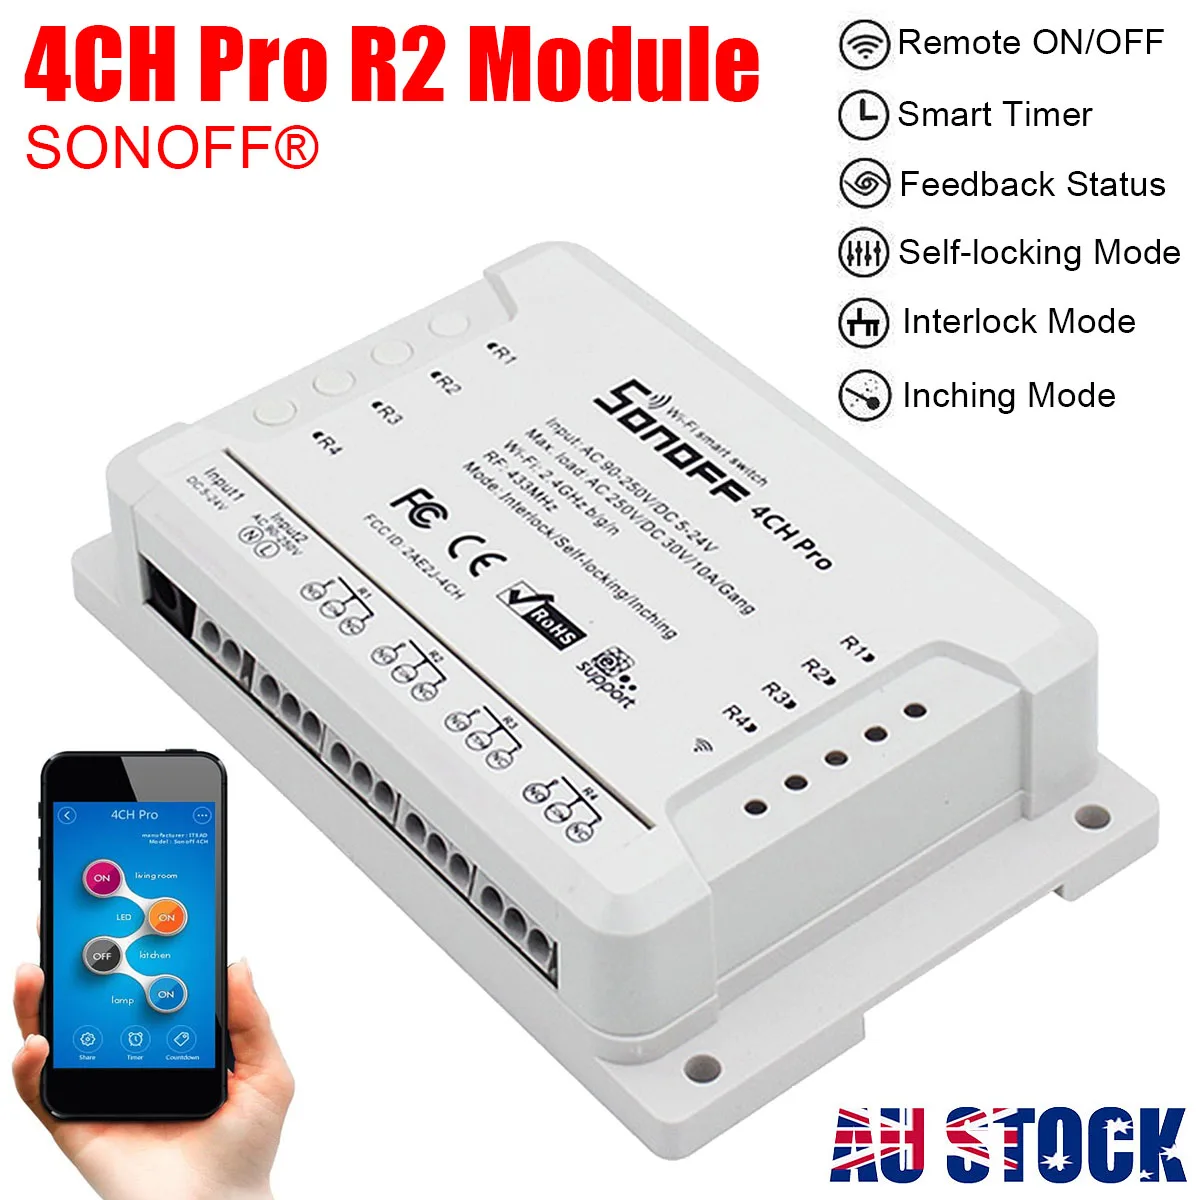 

SONOFF 4CH Pro R2 2.4Ghz 433MHz RF Smart Home WIFI Wireless Switch APP Remote Control Module Inching/Self-Locking/Interlock